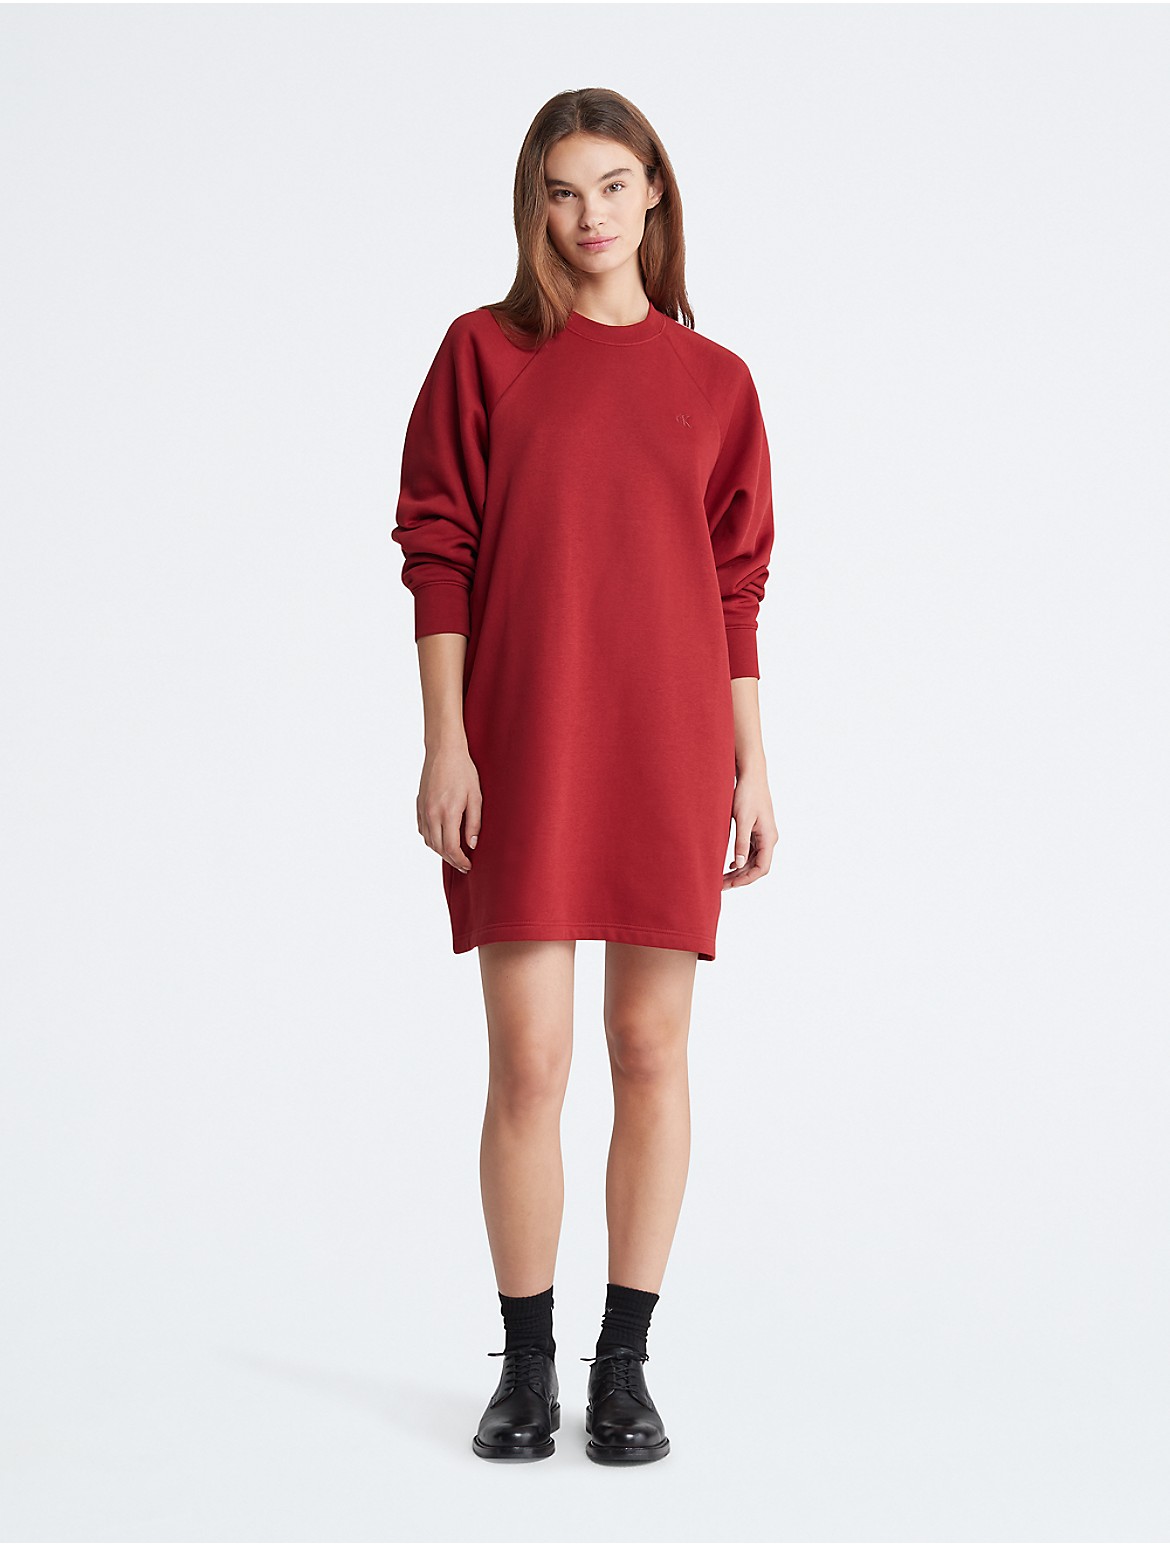 Calvin Klein Women's Archive Logo Fleece Sweatshirt Dress - Red - XS